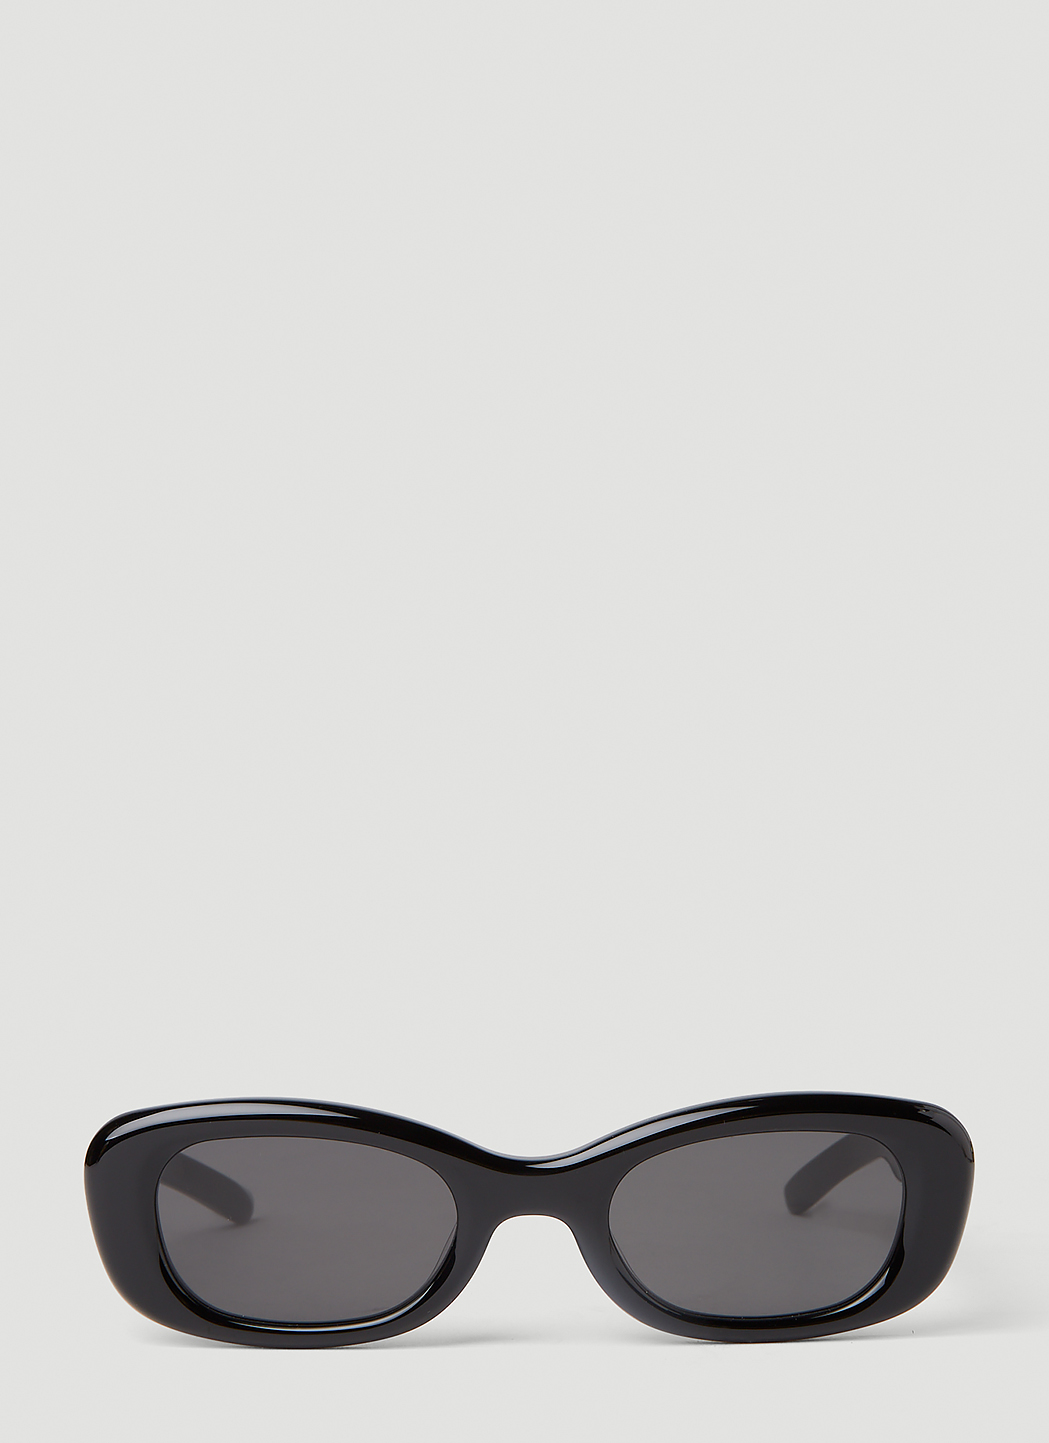 s logo sunglasses